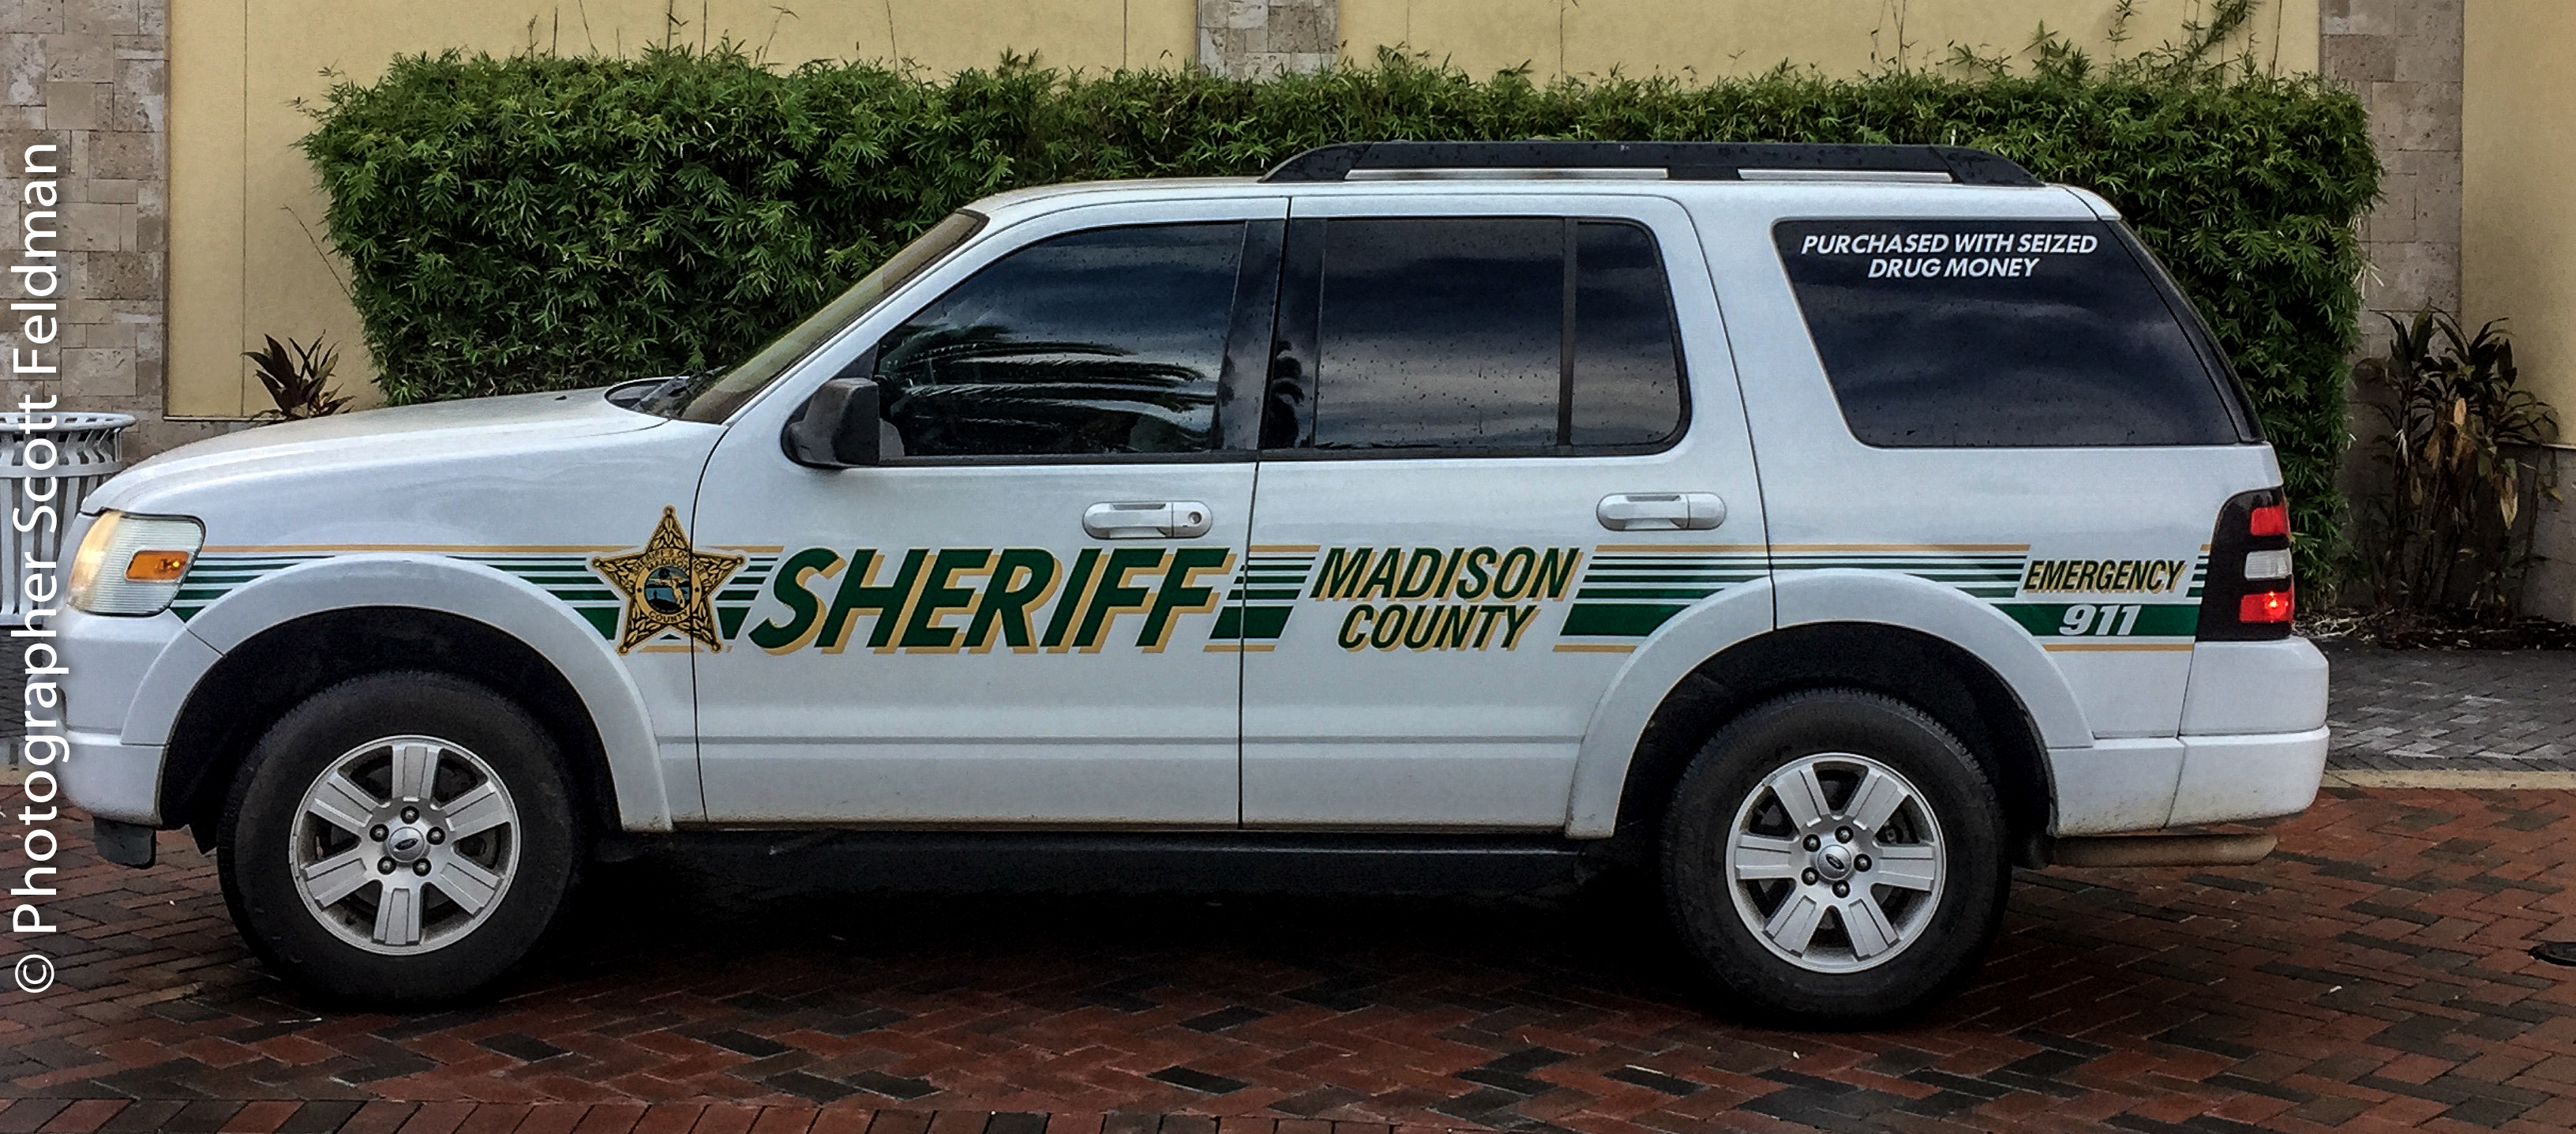 madison-county-sheriffs-office